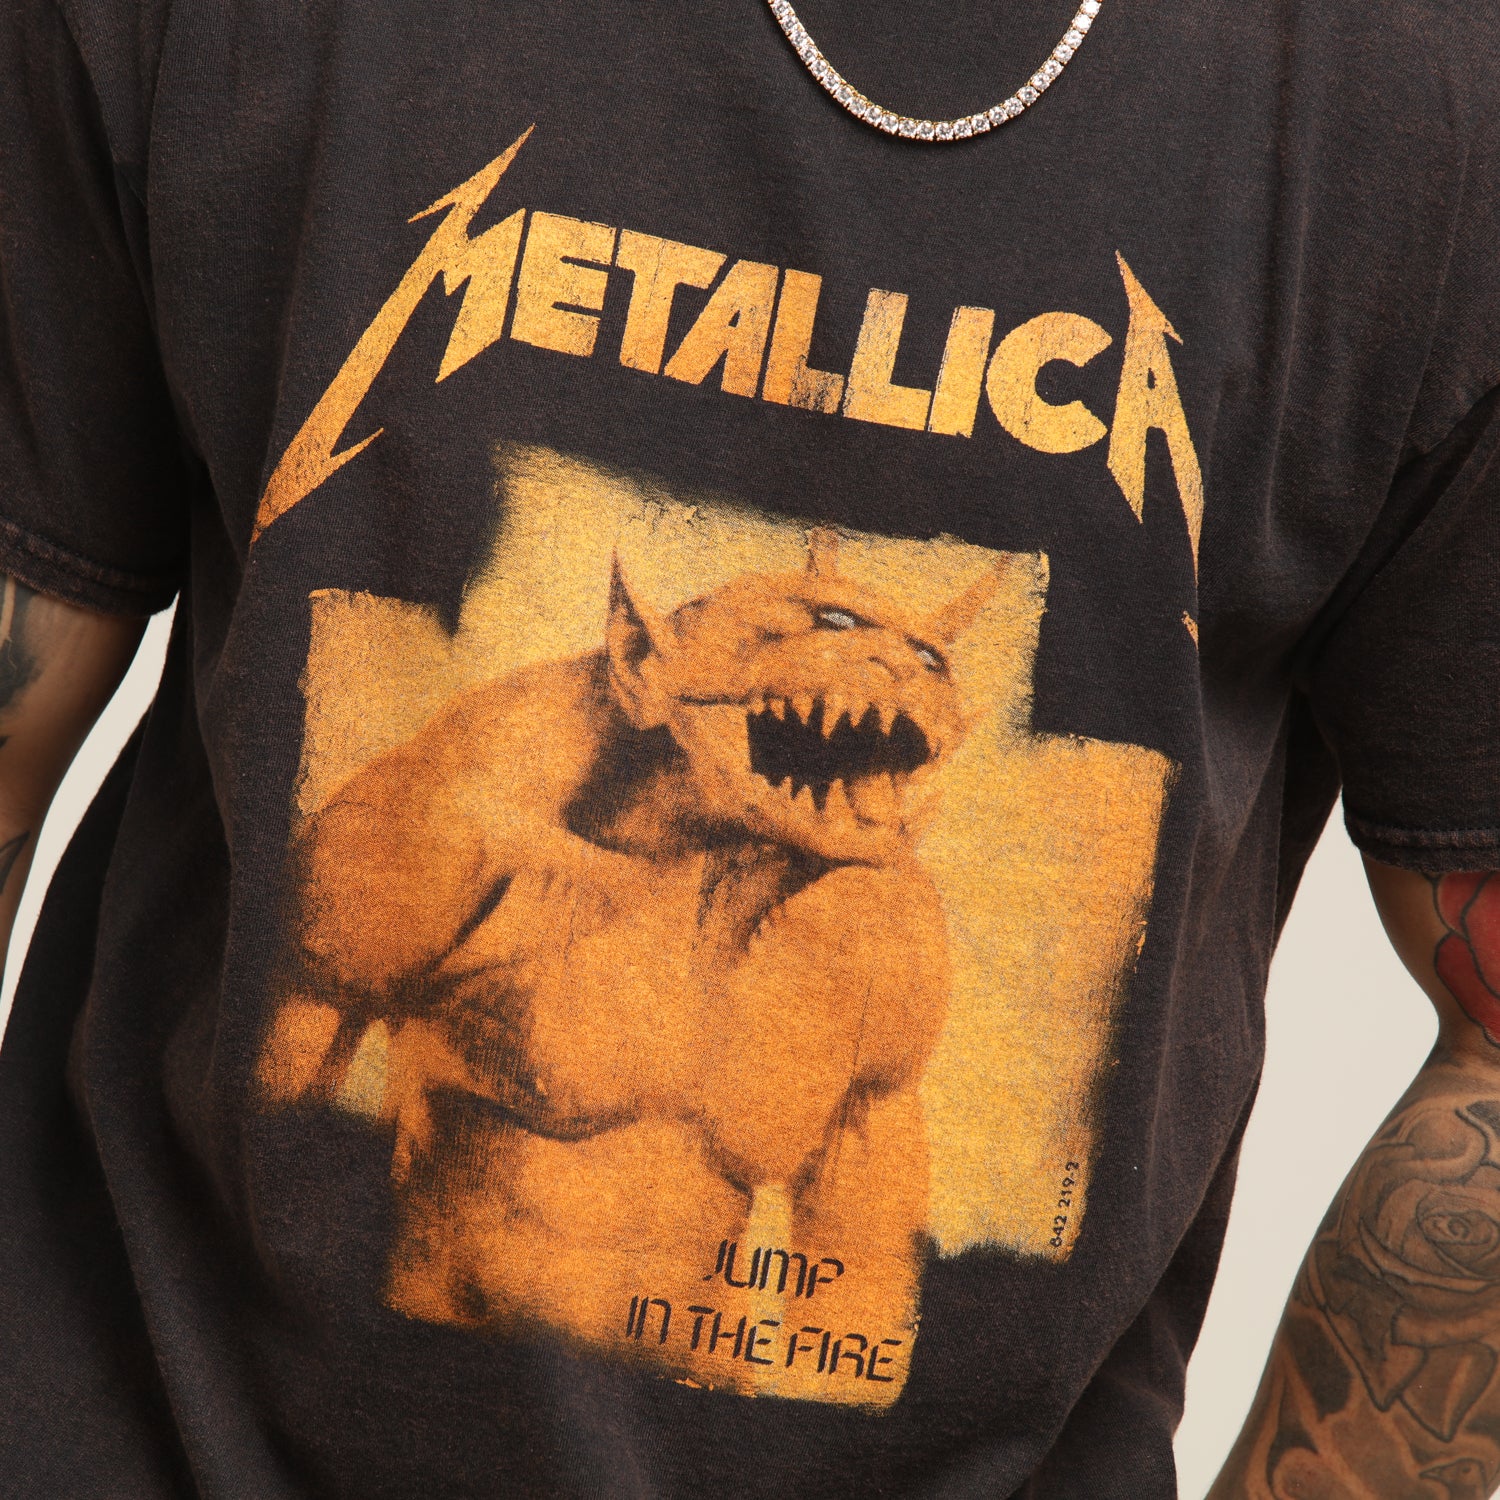 Jump in the Fire T Shirt S-5XL 100% cotton yellow black Metallica